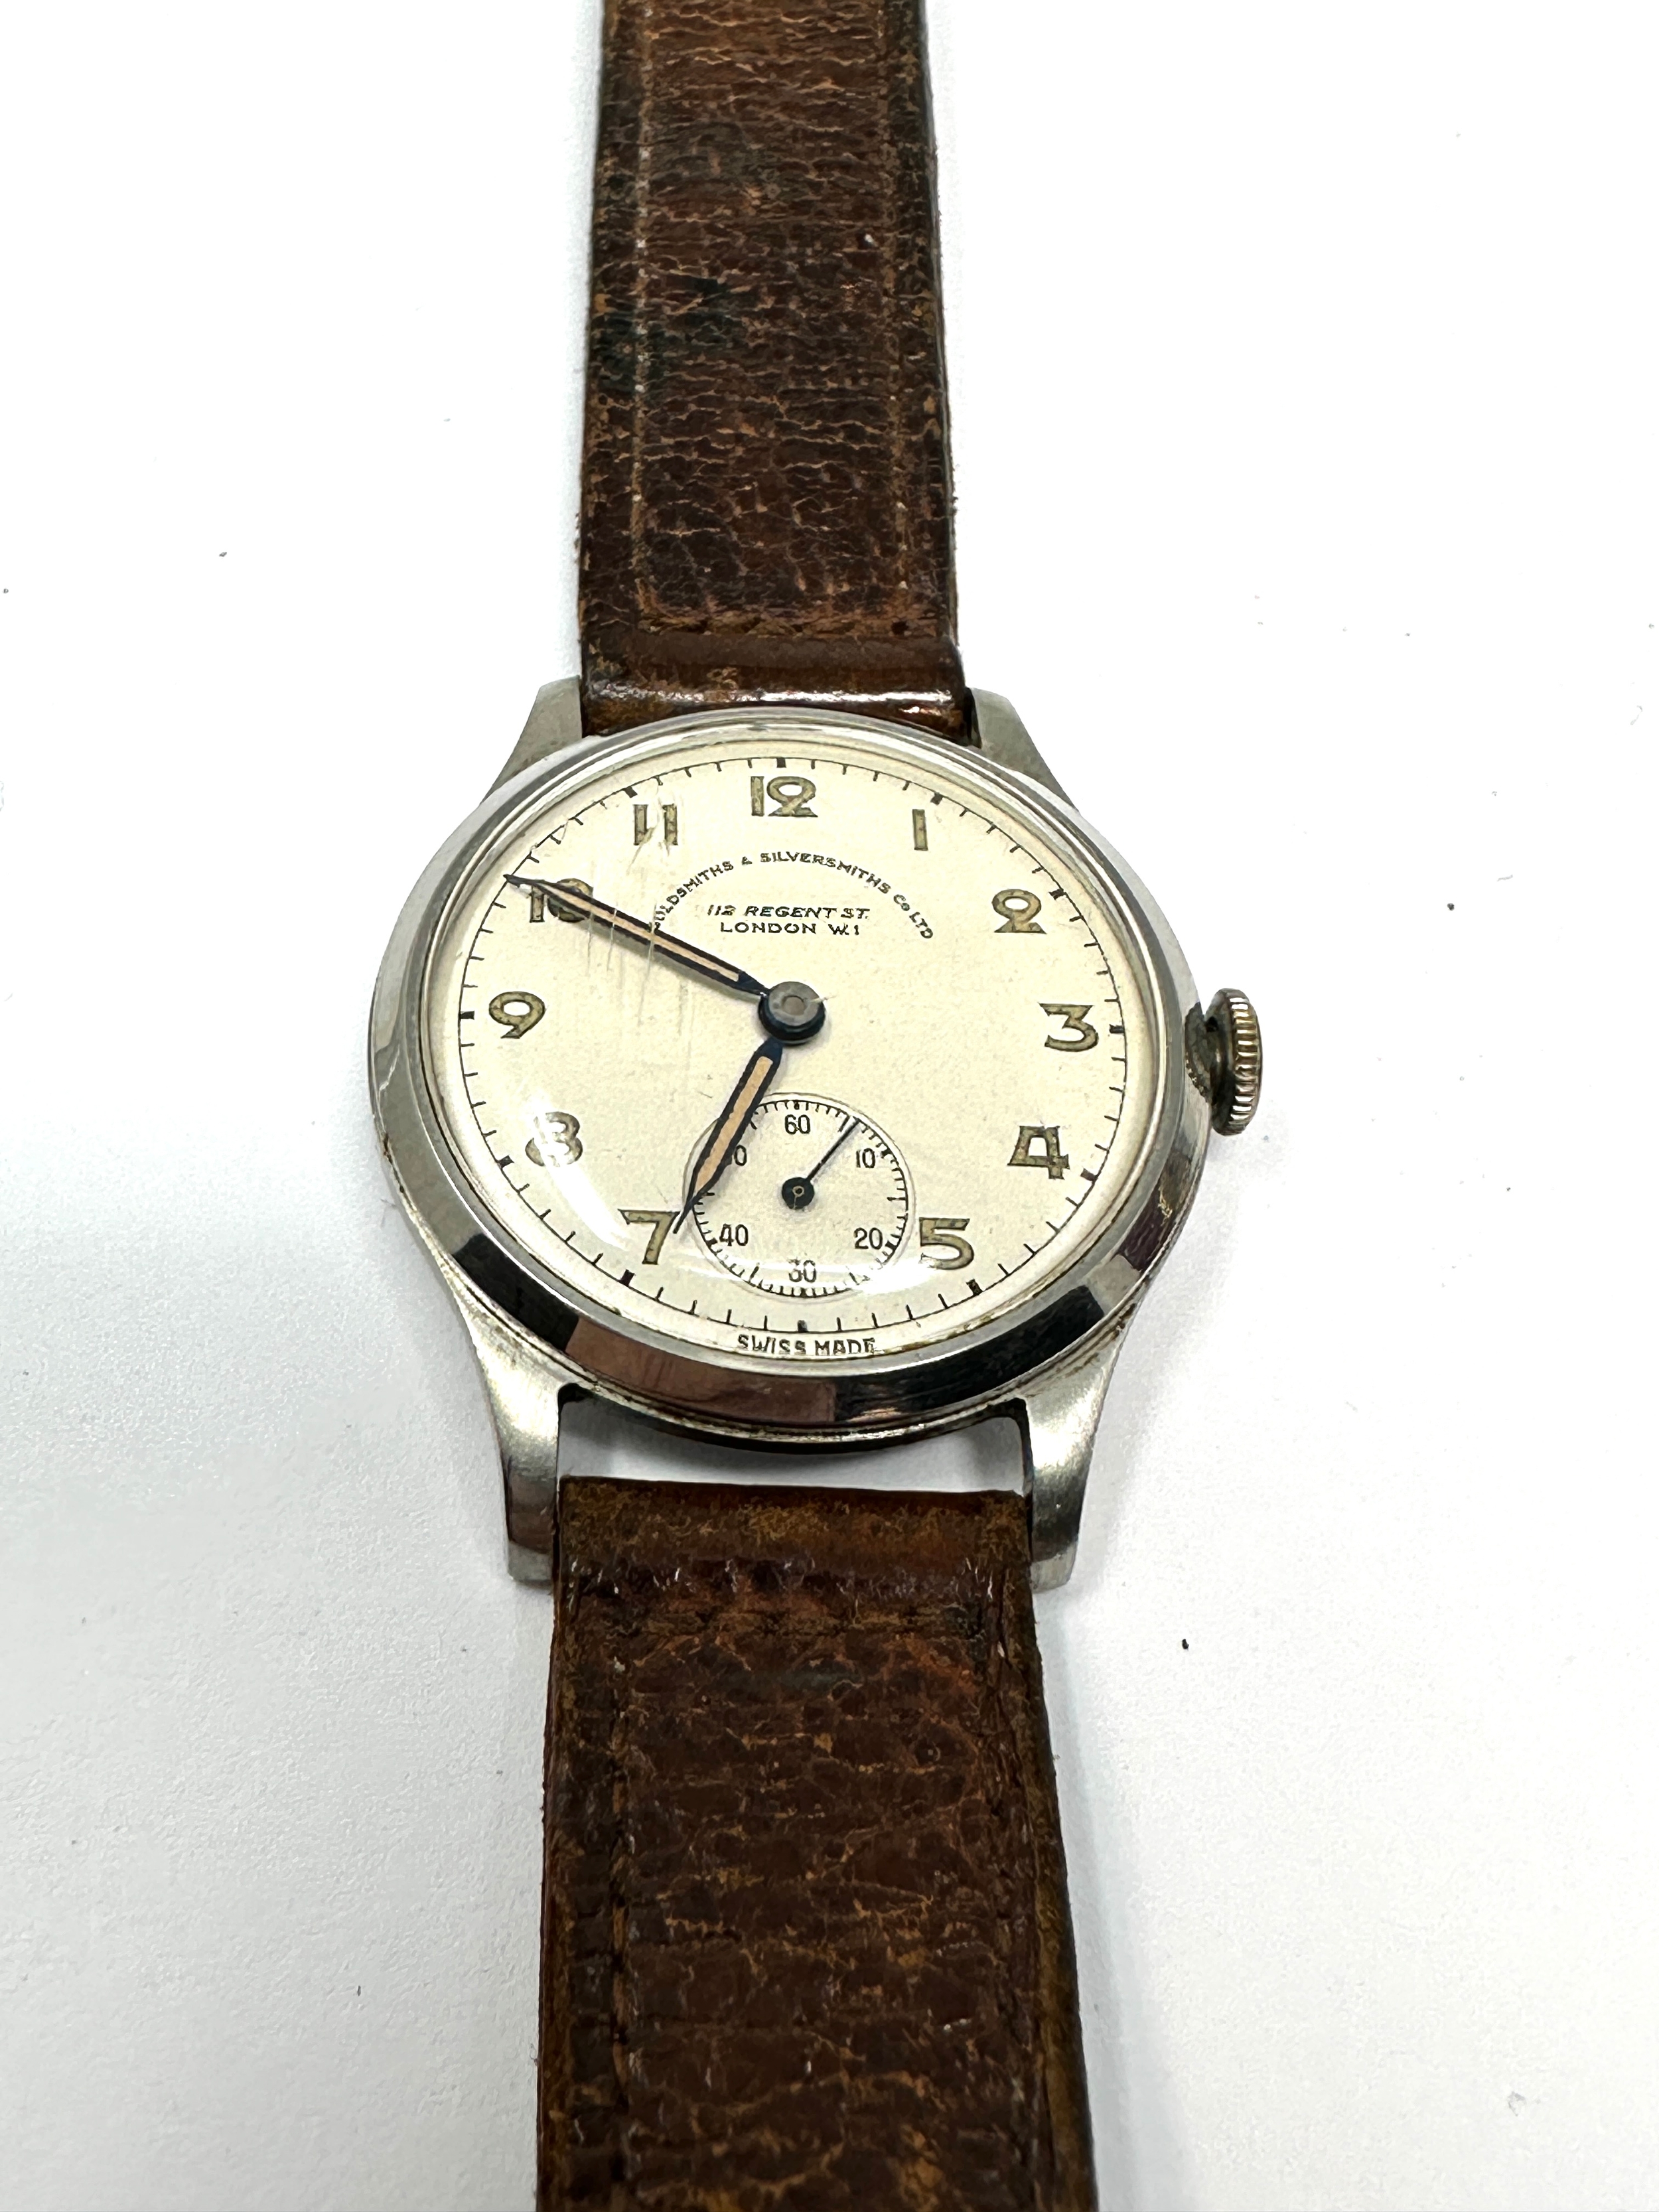 Vintage Goldsmiths and Silversmiths co Ltd gents wristwatch the watch is ticking